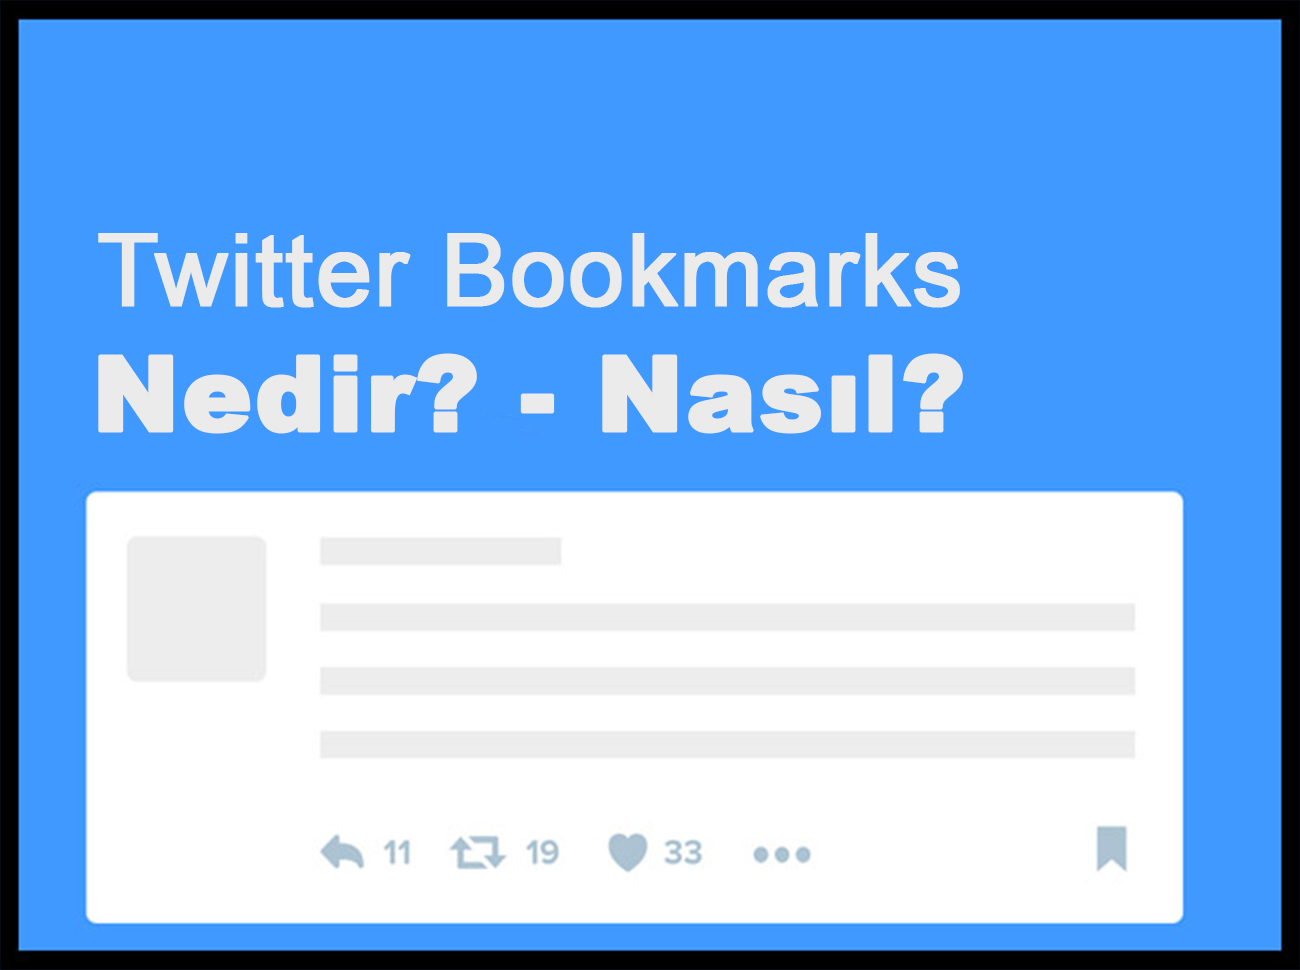 Twitter Bookmarks Nedir?